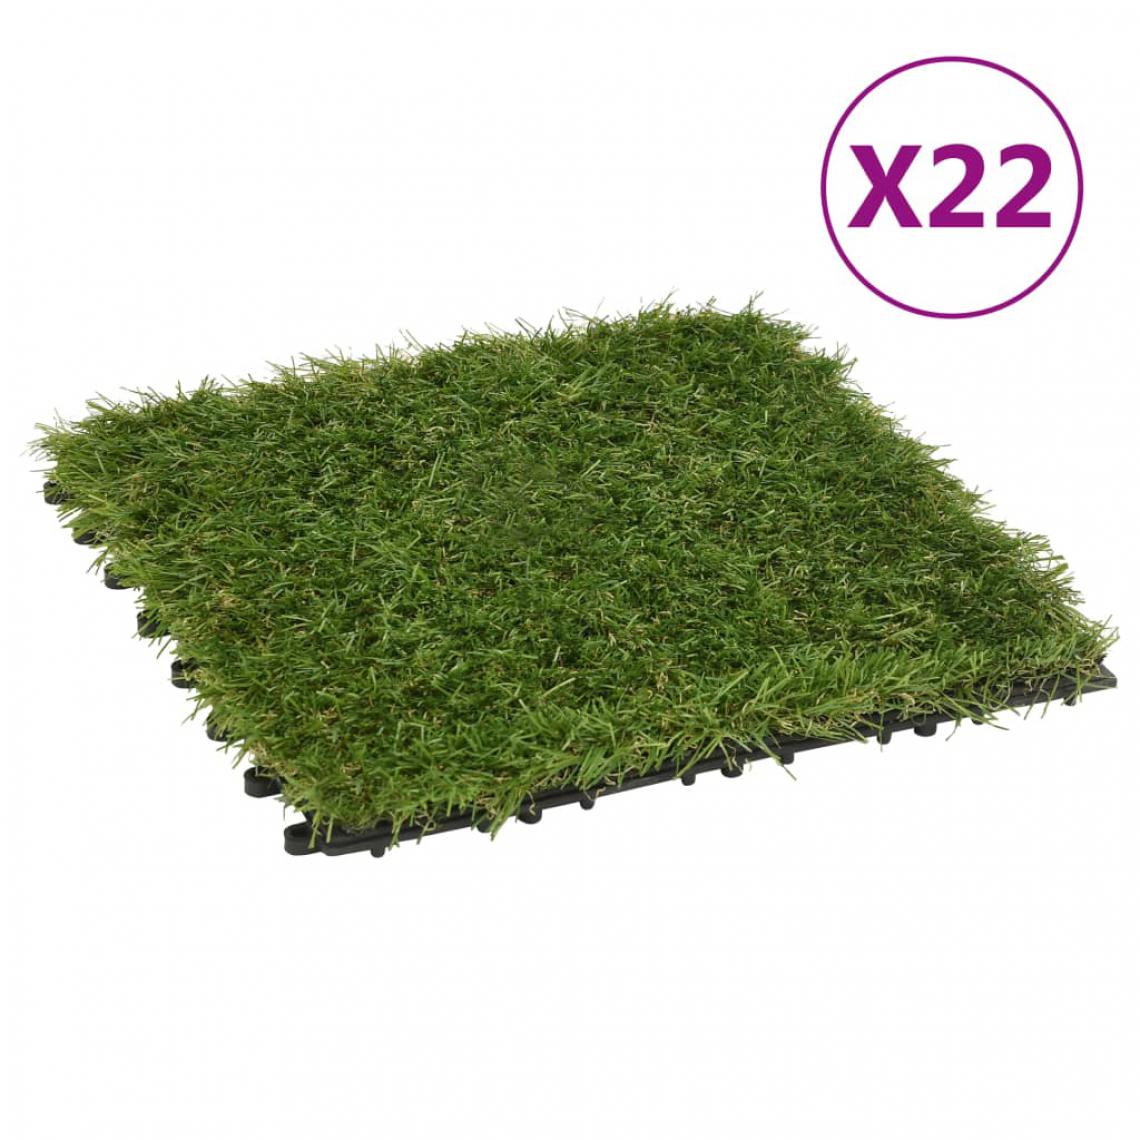 Vidaxl - vidaXL Carreaux de gazon artificiel 22 pcs Vert 30x30 cm - Plantes et fleurs artificielles